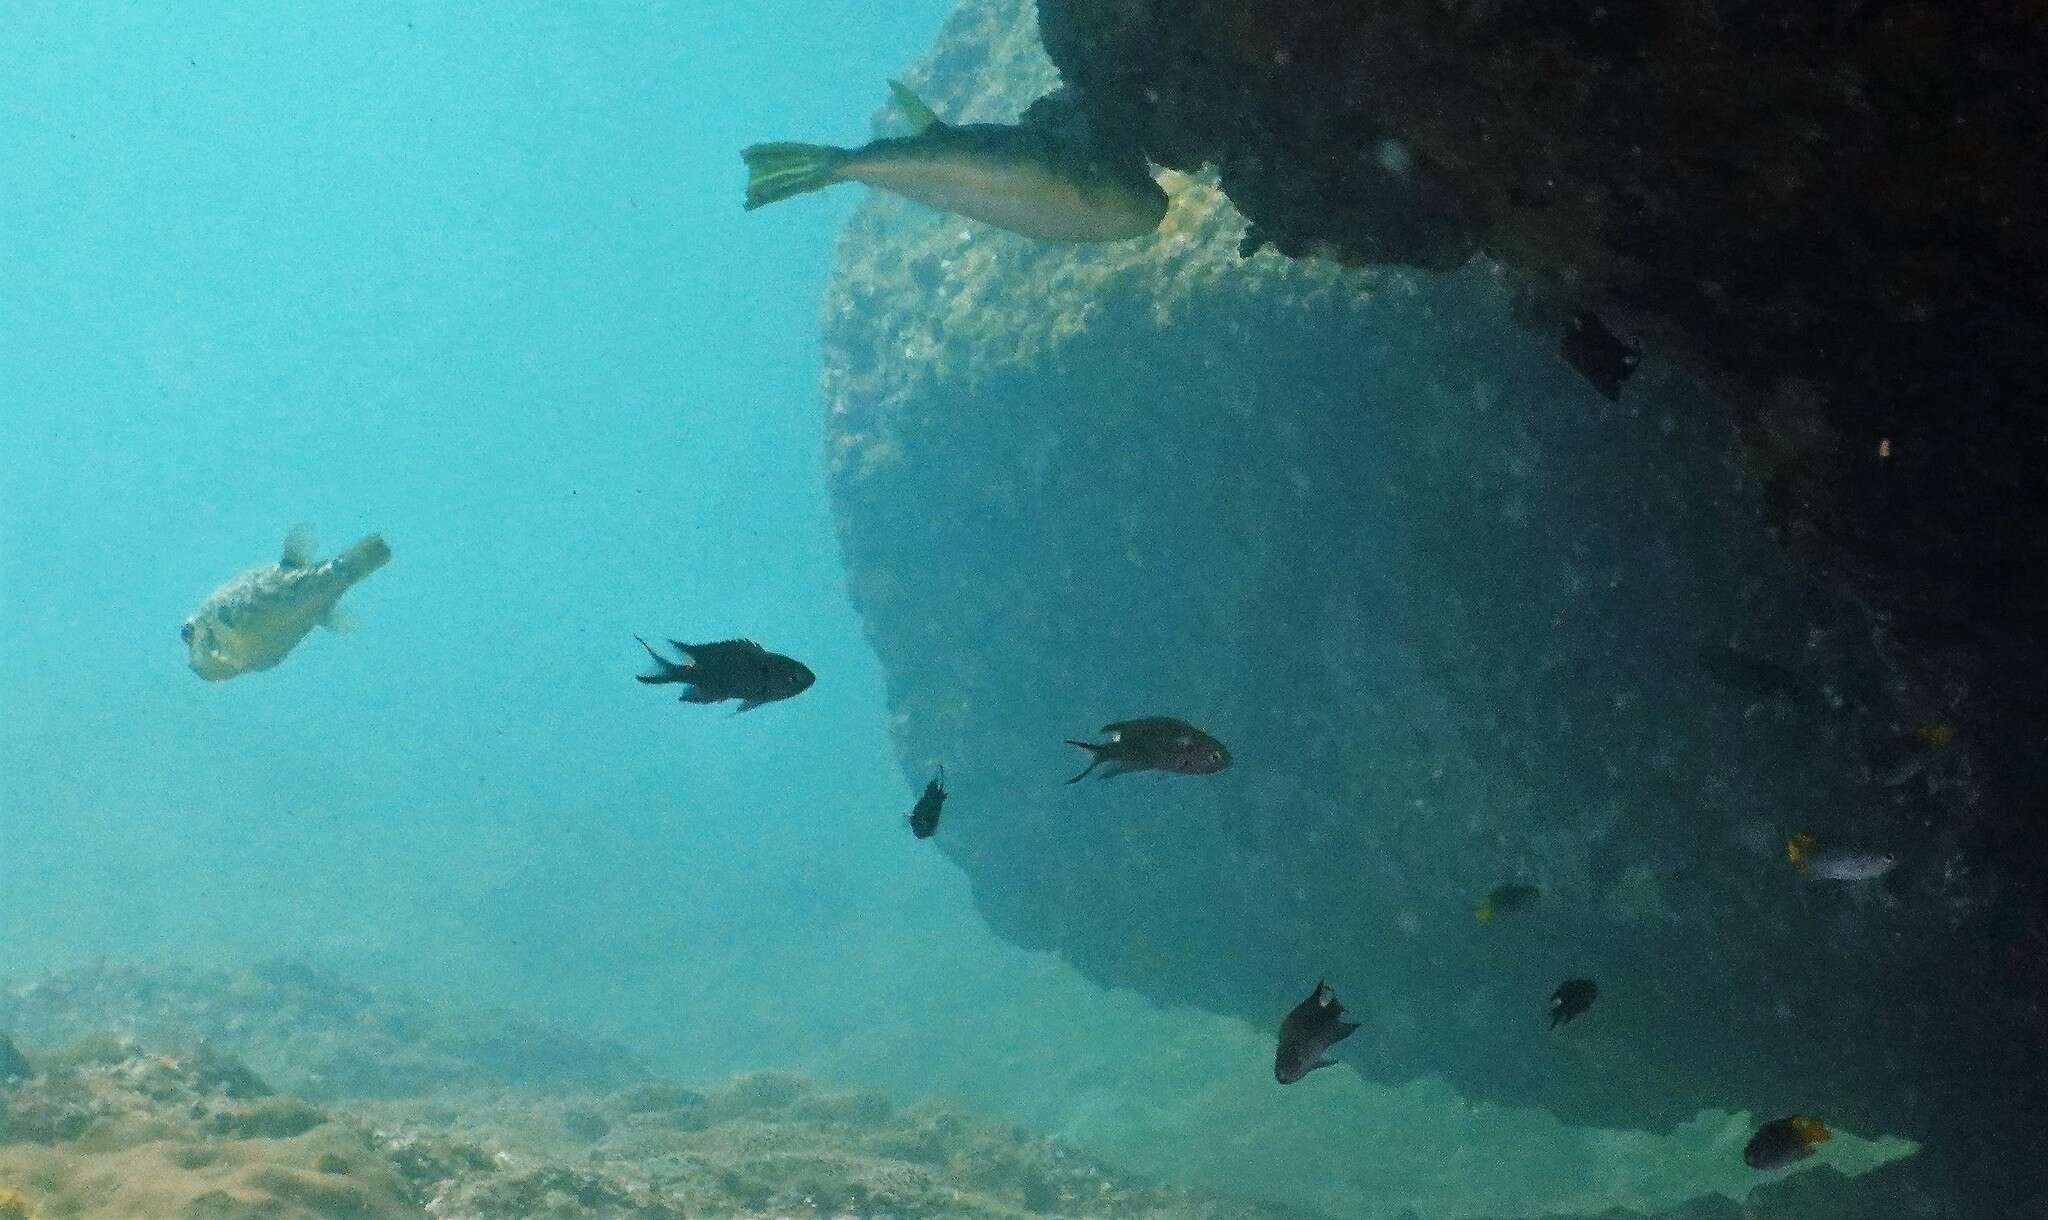 Image of Hong Kong Pufferfish